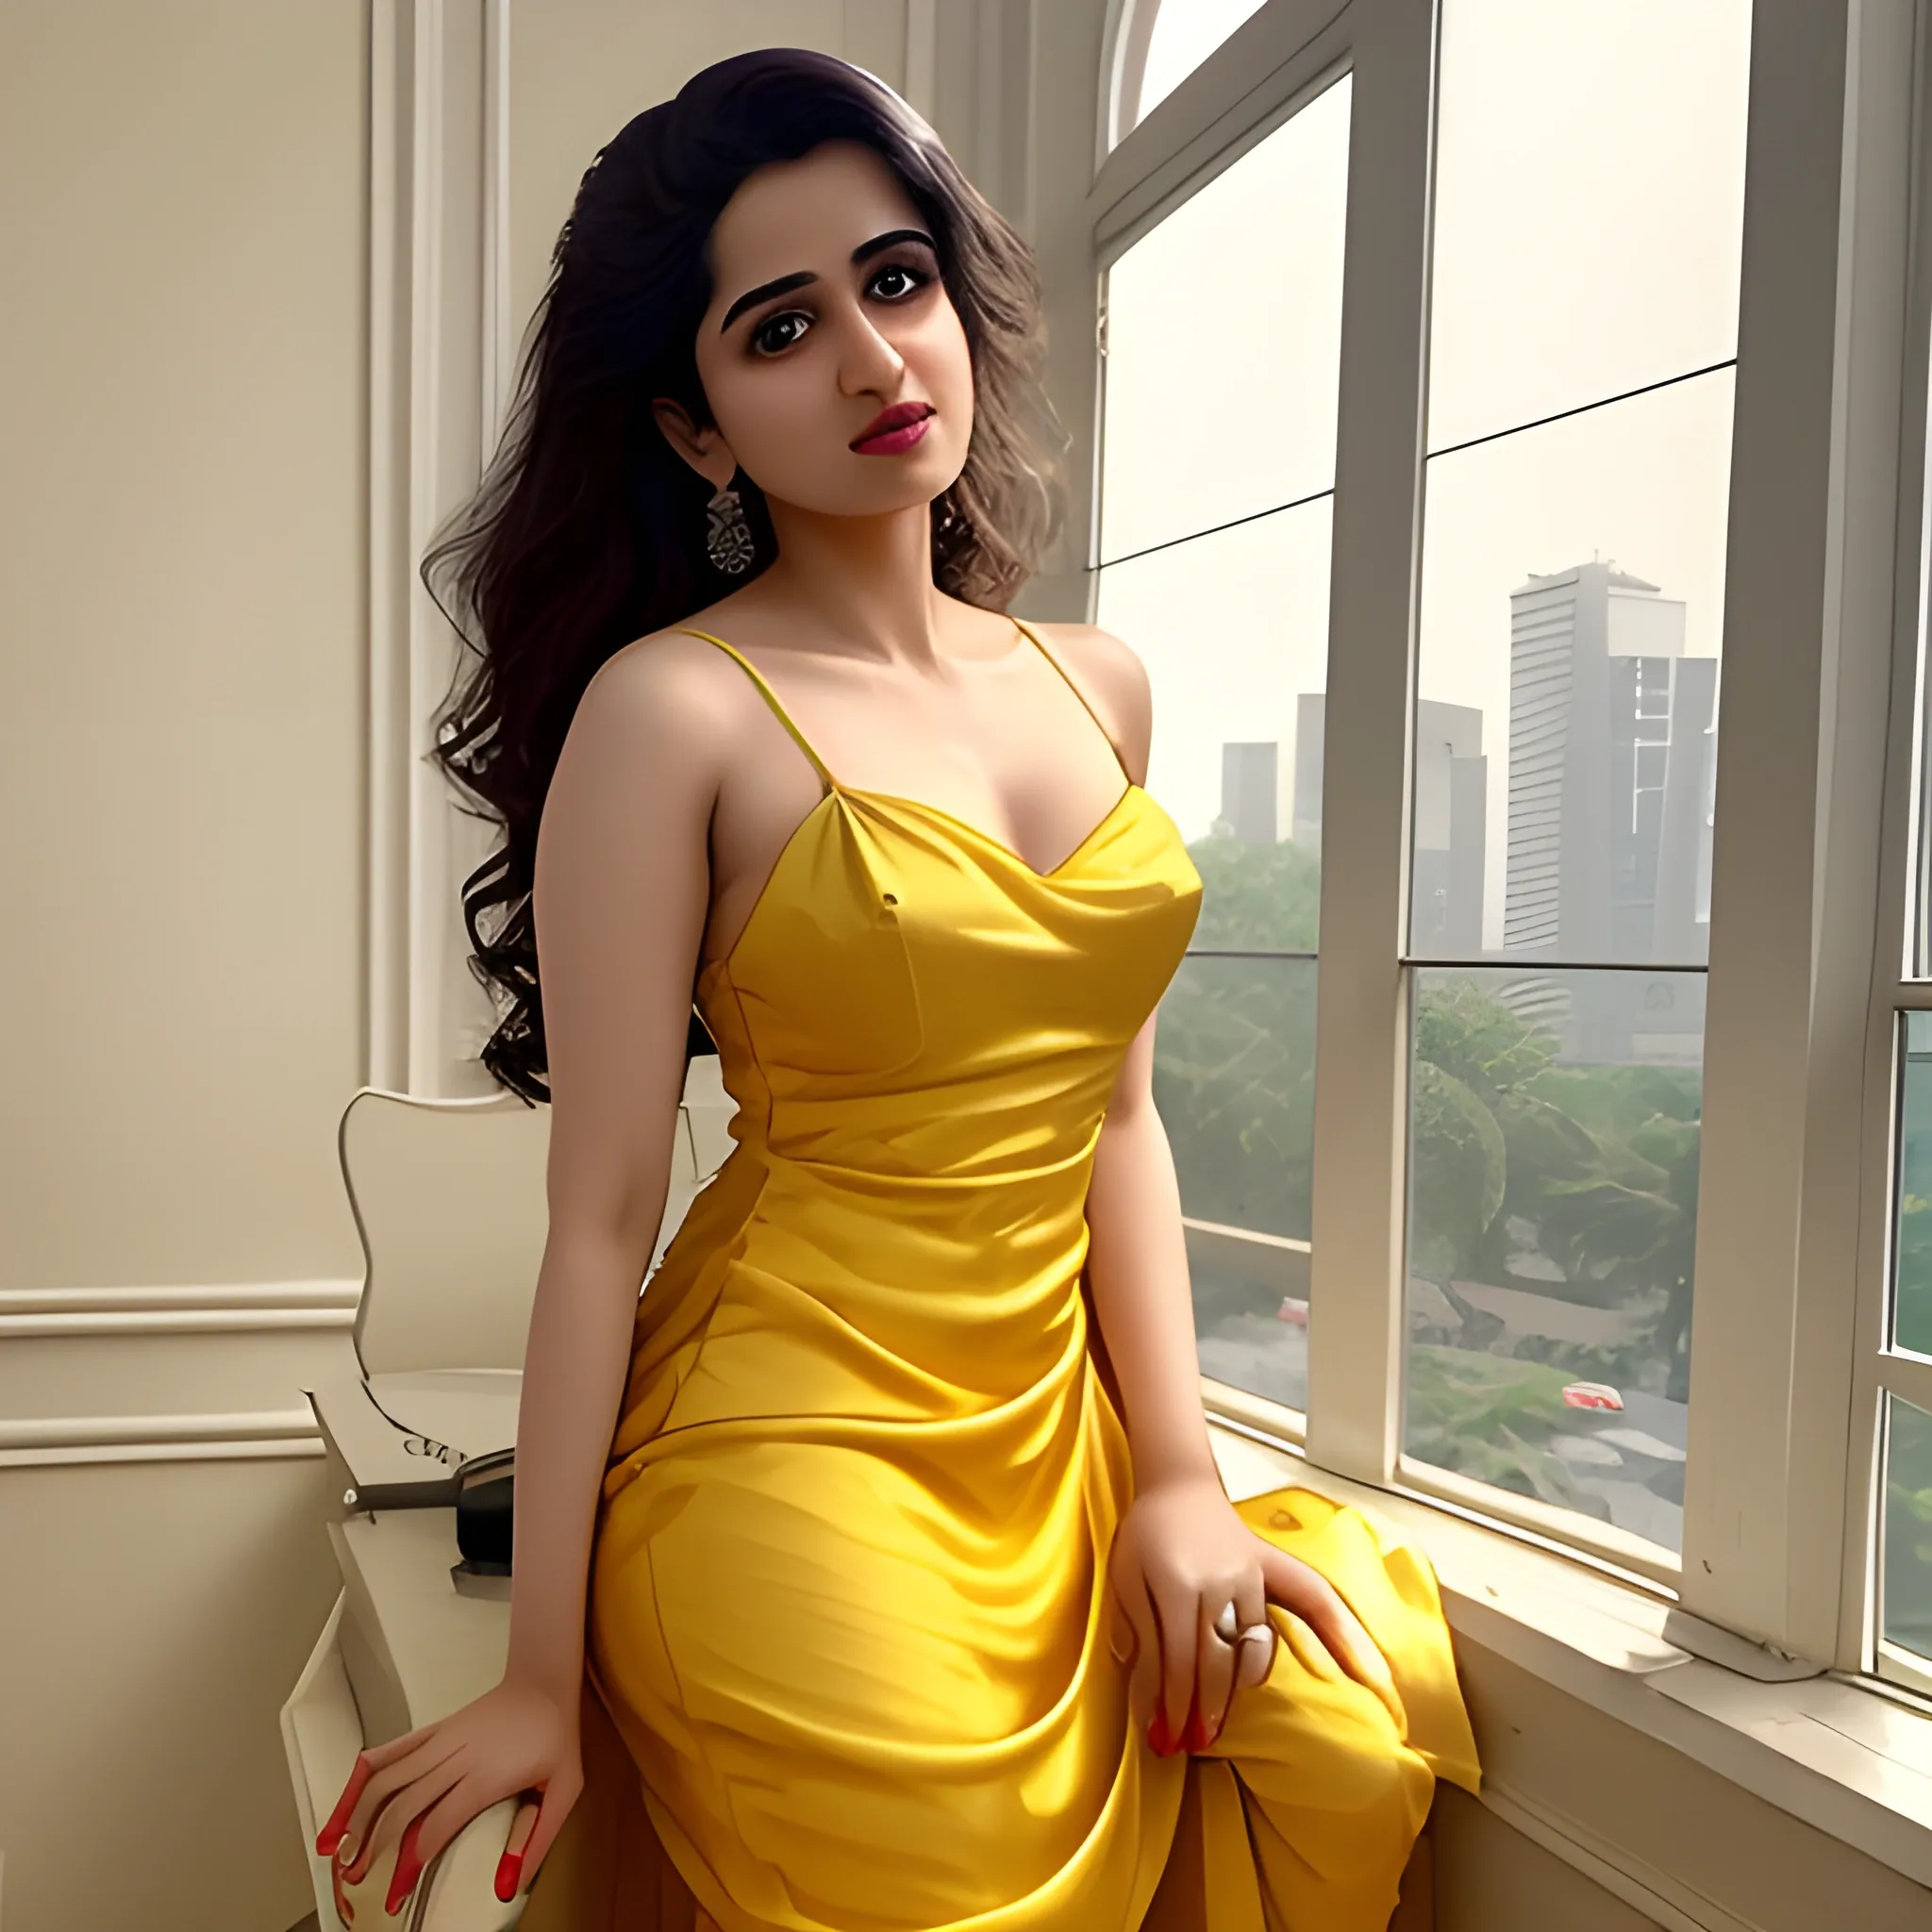 Neha Malik wearing a Yellow Satin slip dress posing for camera